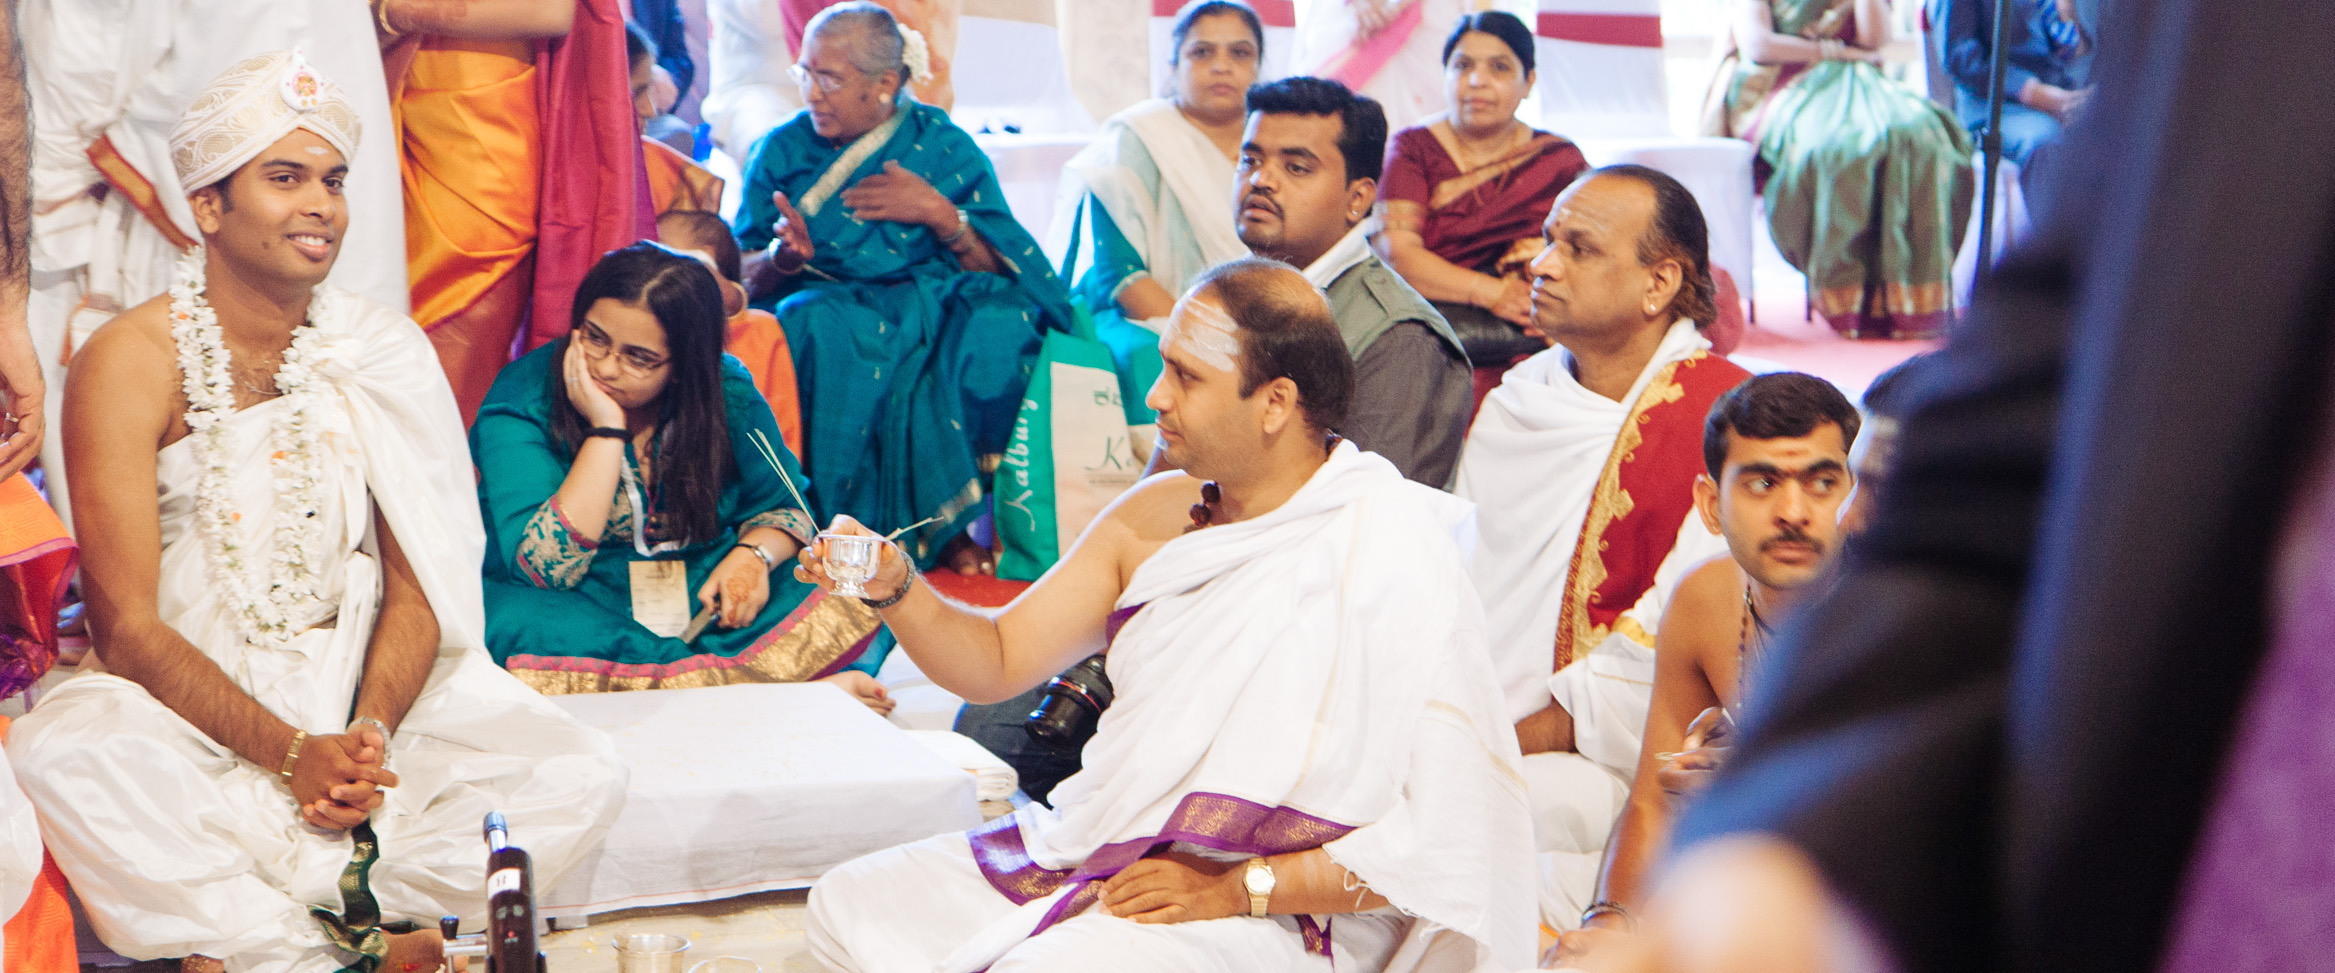 The Vedic Priest Conducting Wedding Rituals